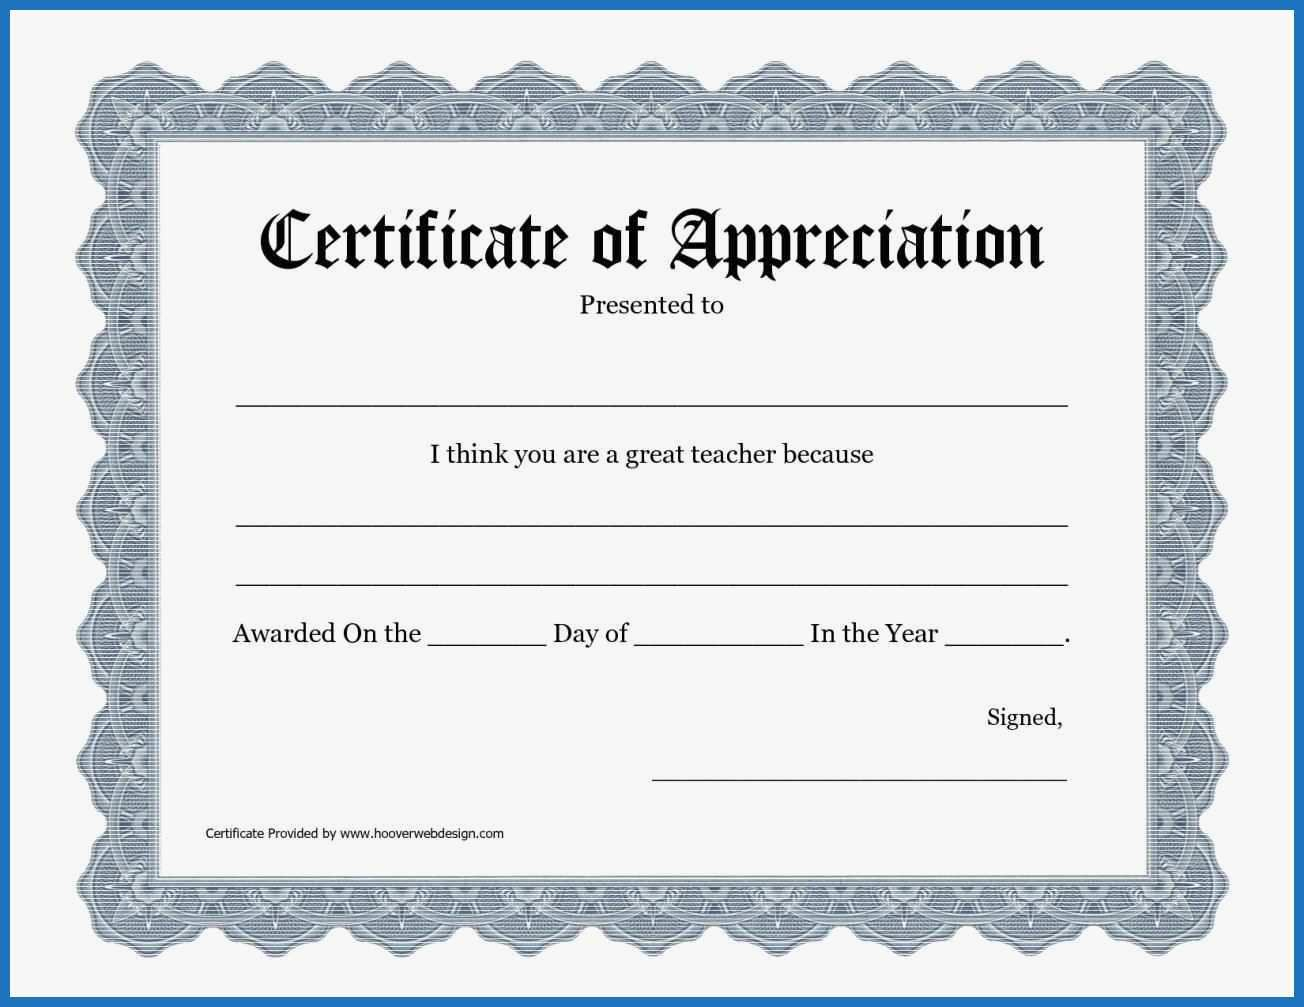 Certificate Templates: Free Template Certificate Of Appreciation Within Certificates Of Appreciation Template